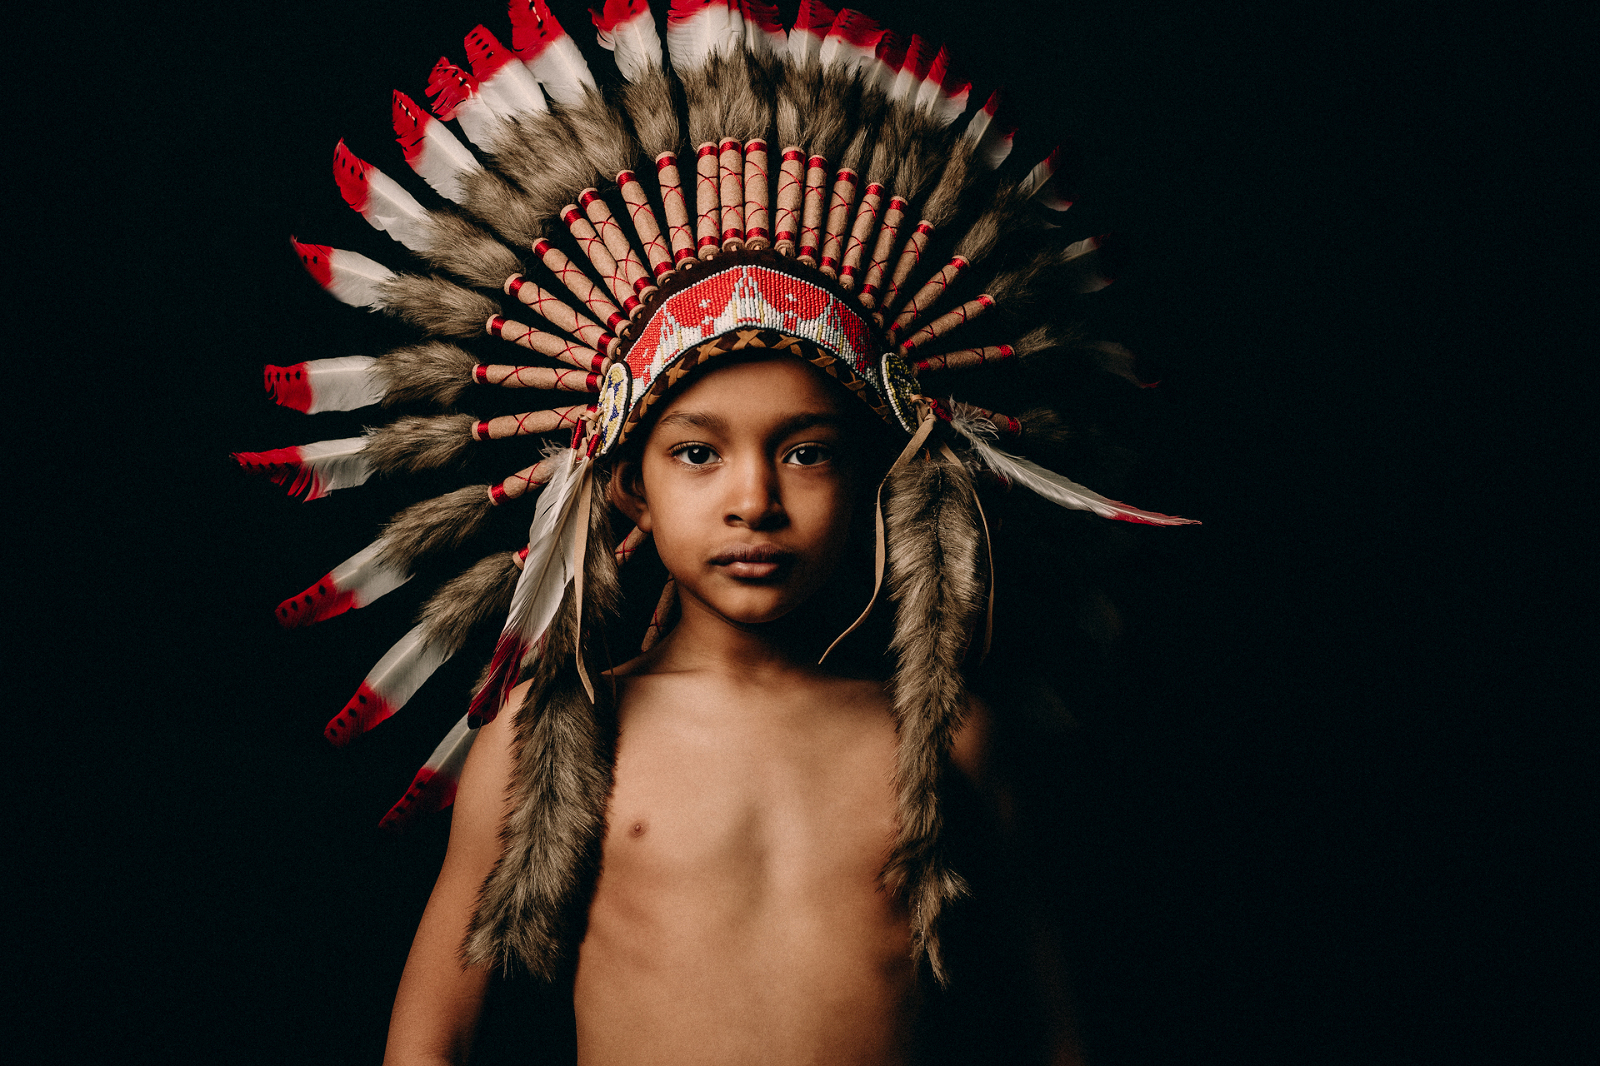 Portrait of a young boy wearing an Indian headdress